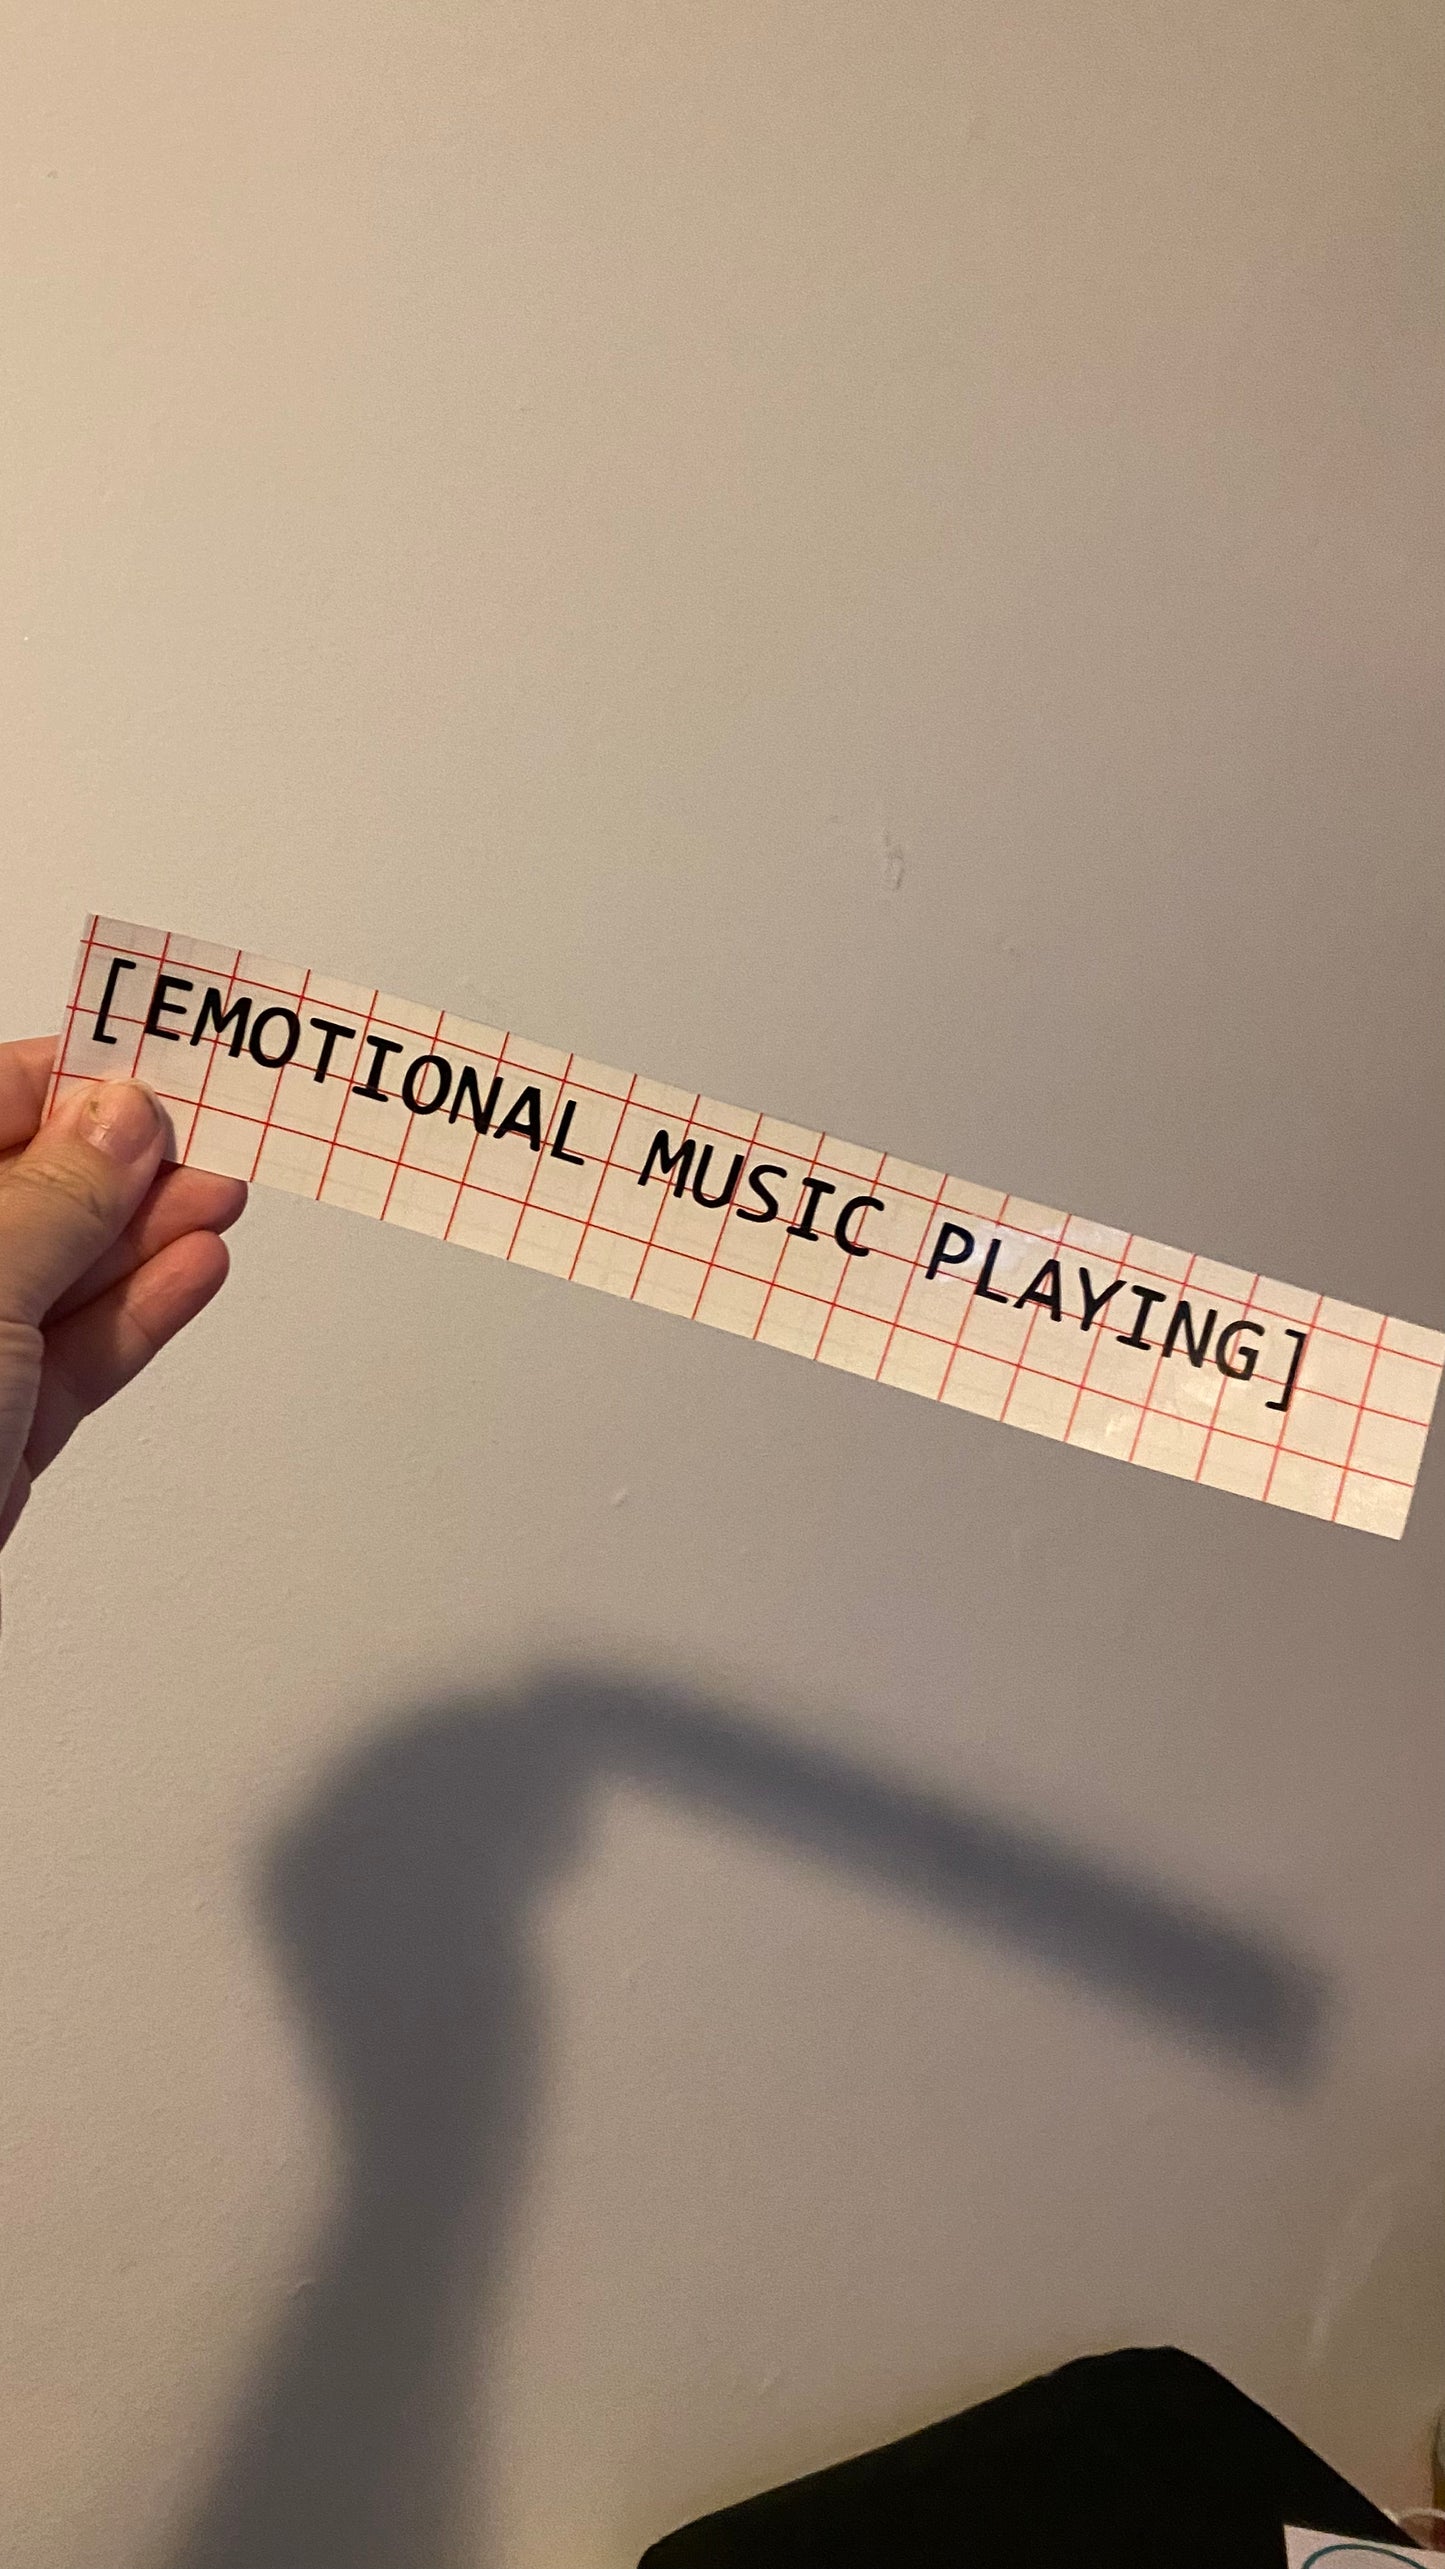 [Emotional Music Playing] Vinyl Decal